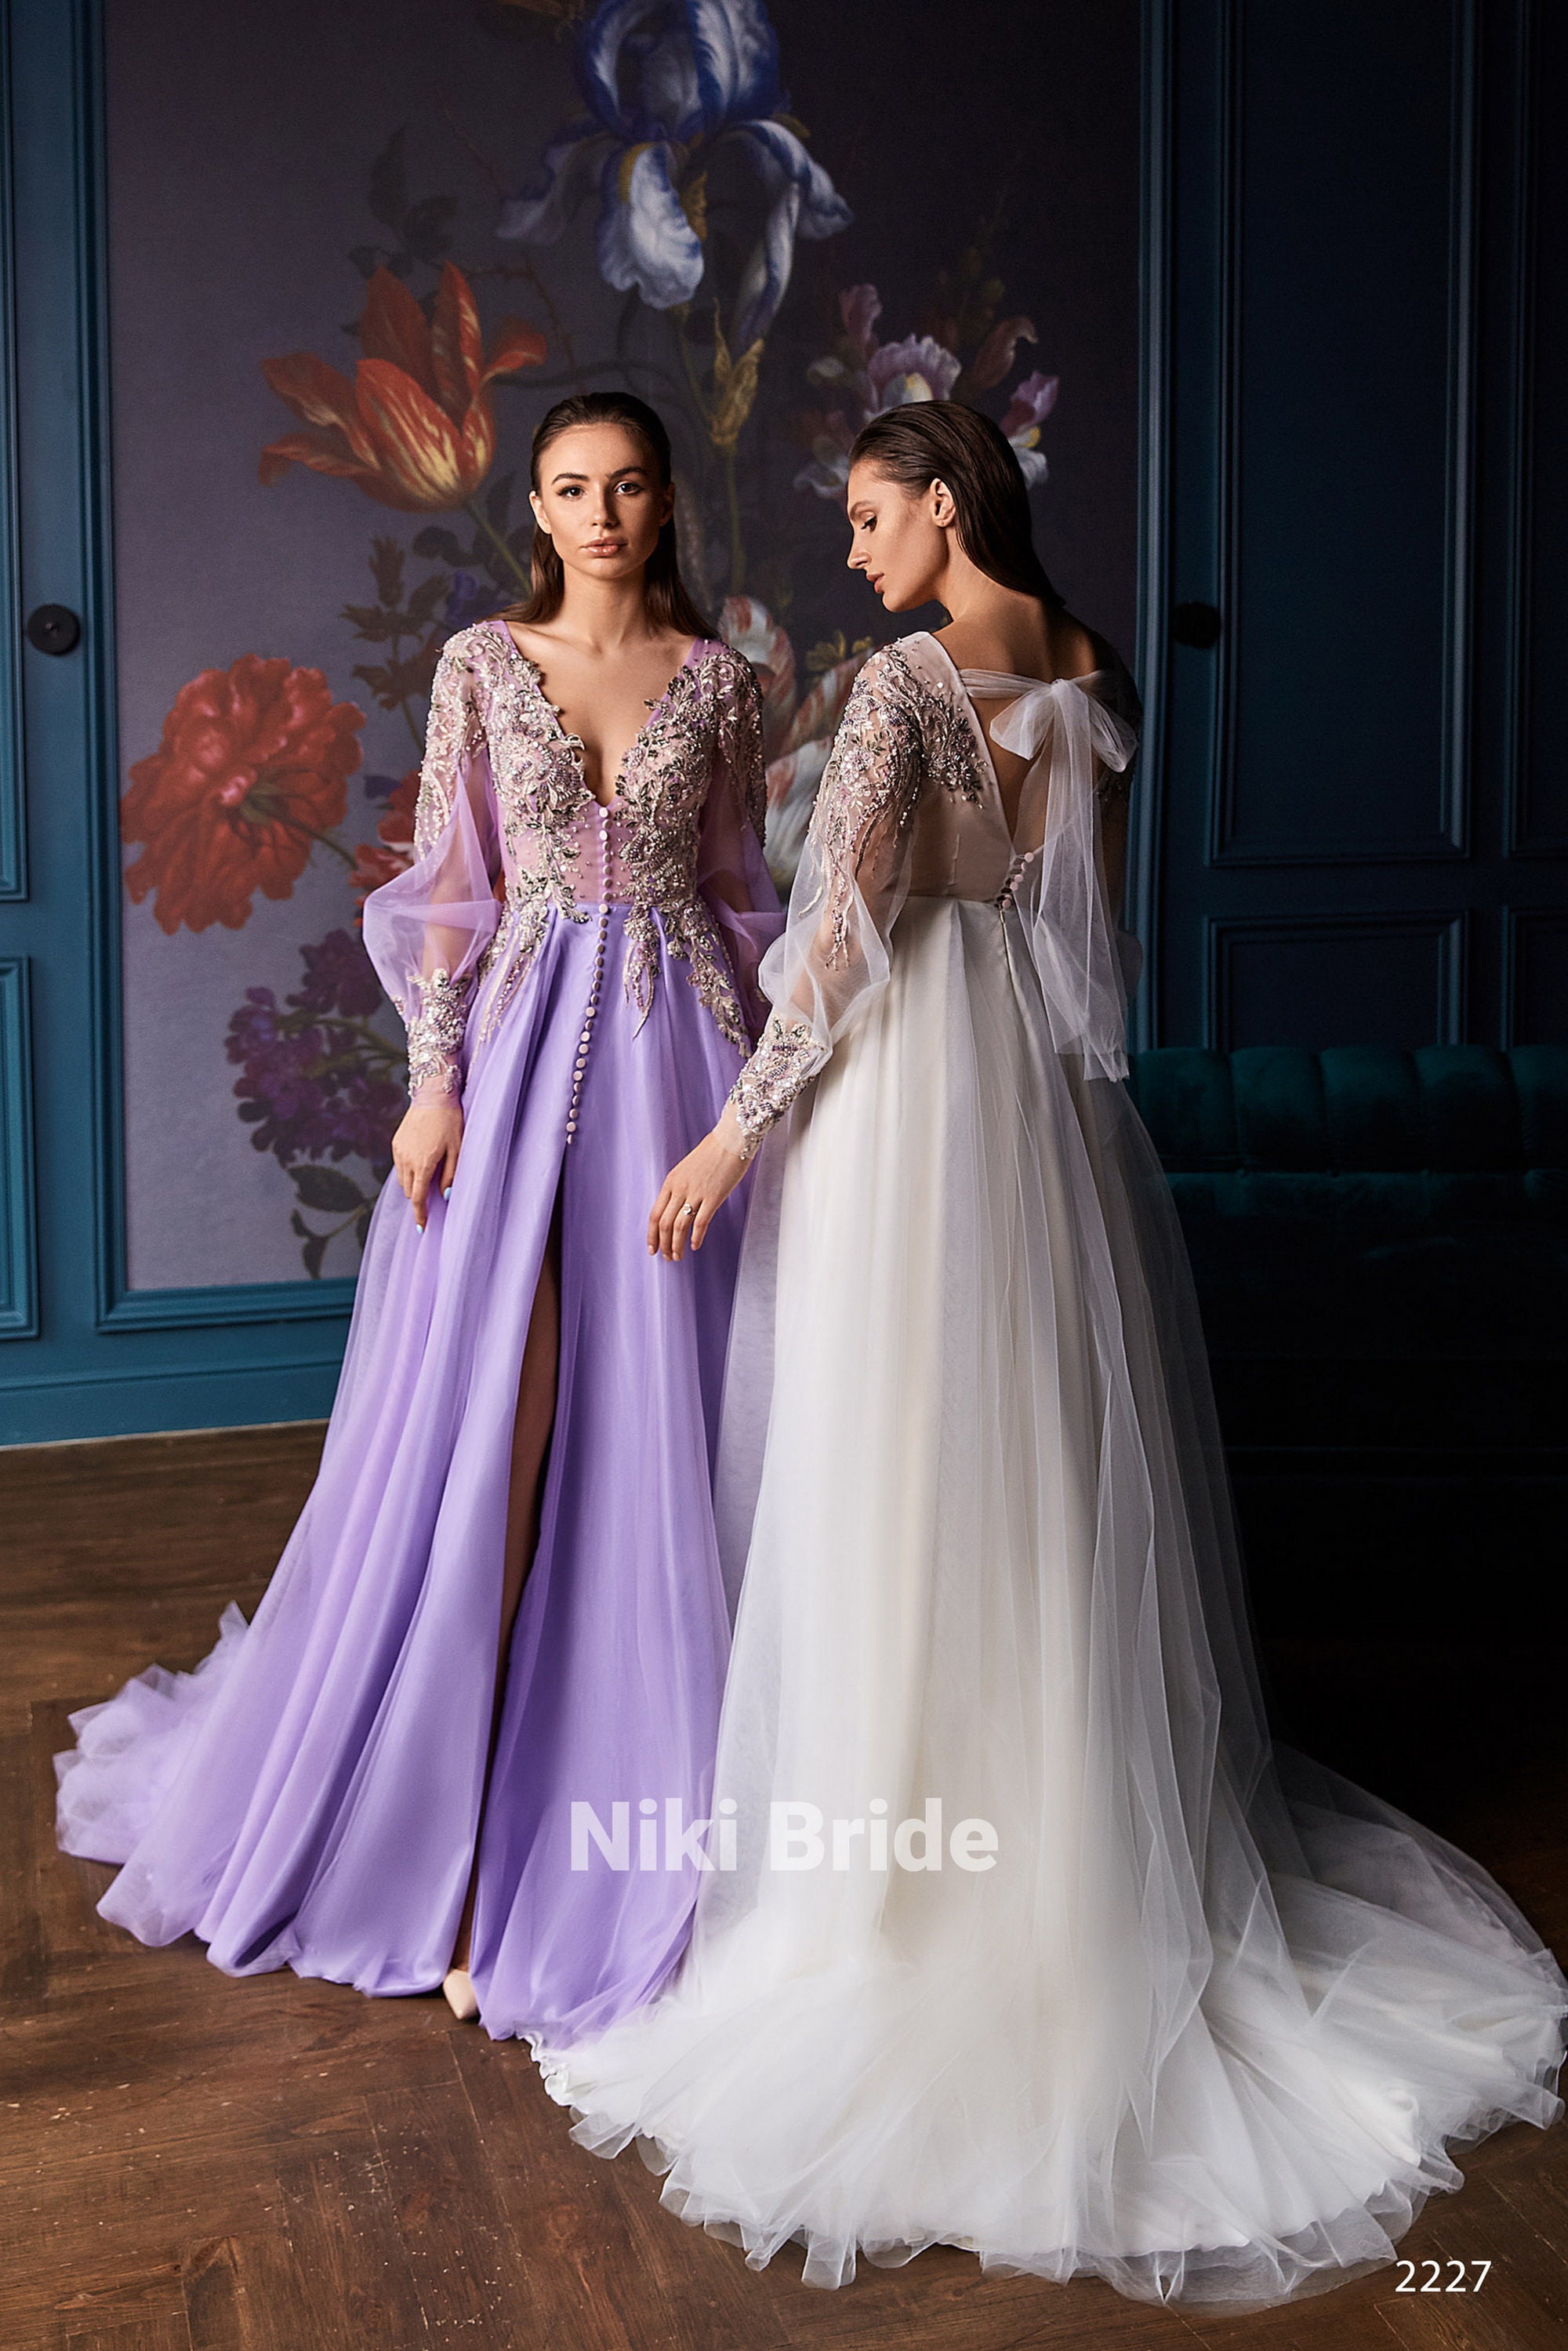 lilac dress for wedding